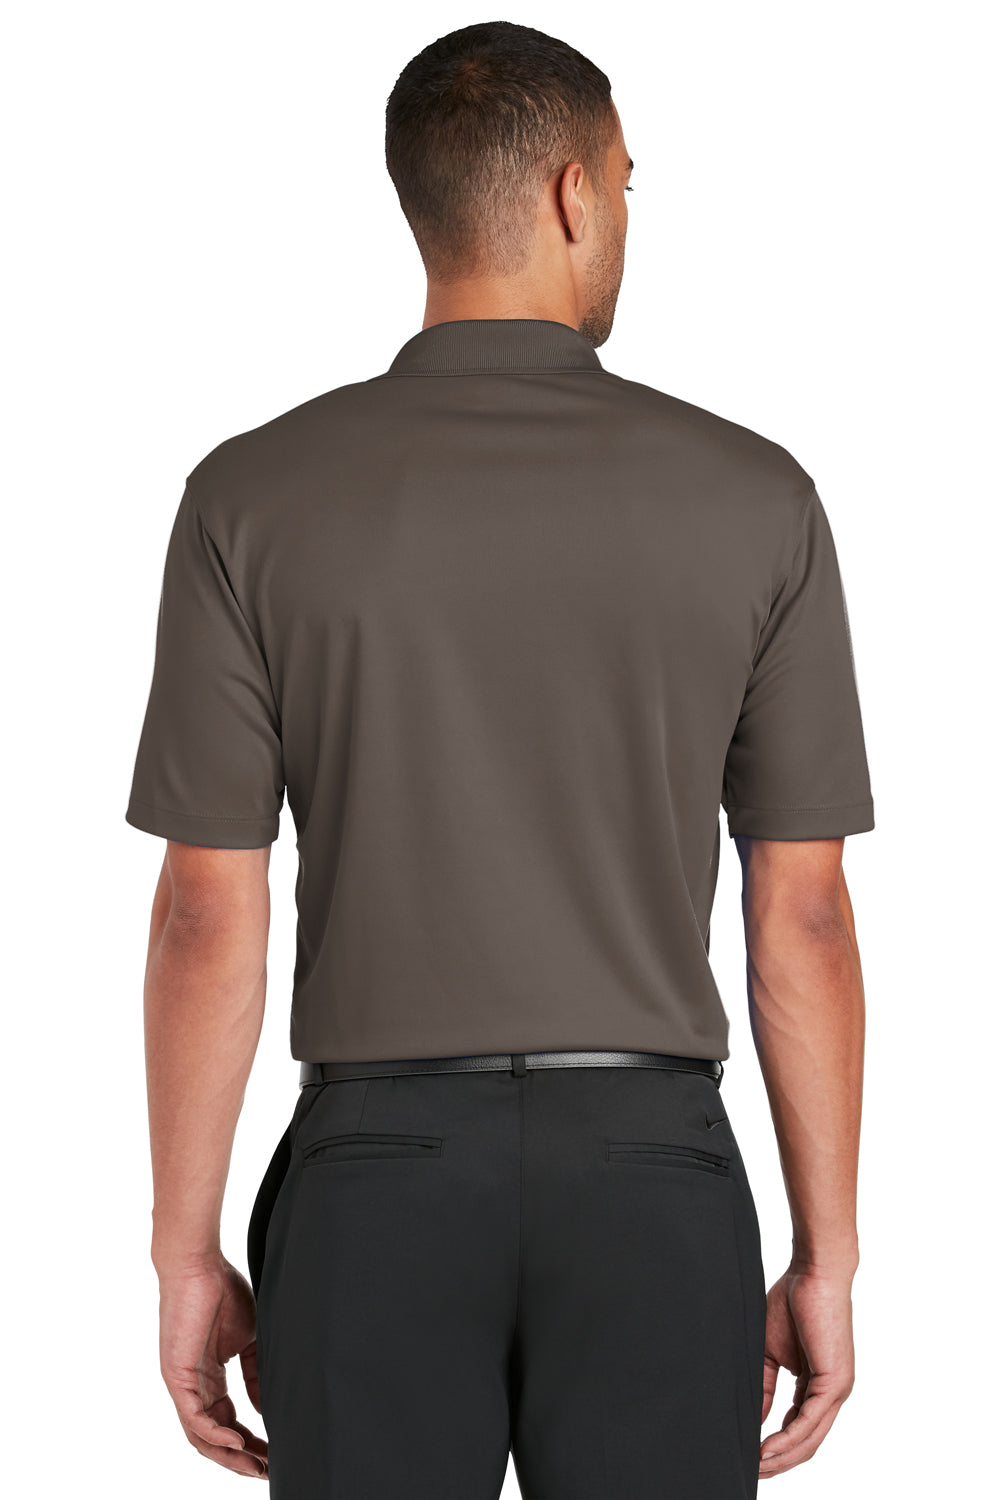 Nike 363807 Mens Dri-Fit Moisture Wicking Short Sleeve Polo Shirt Brown Back